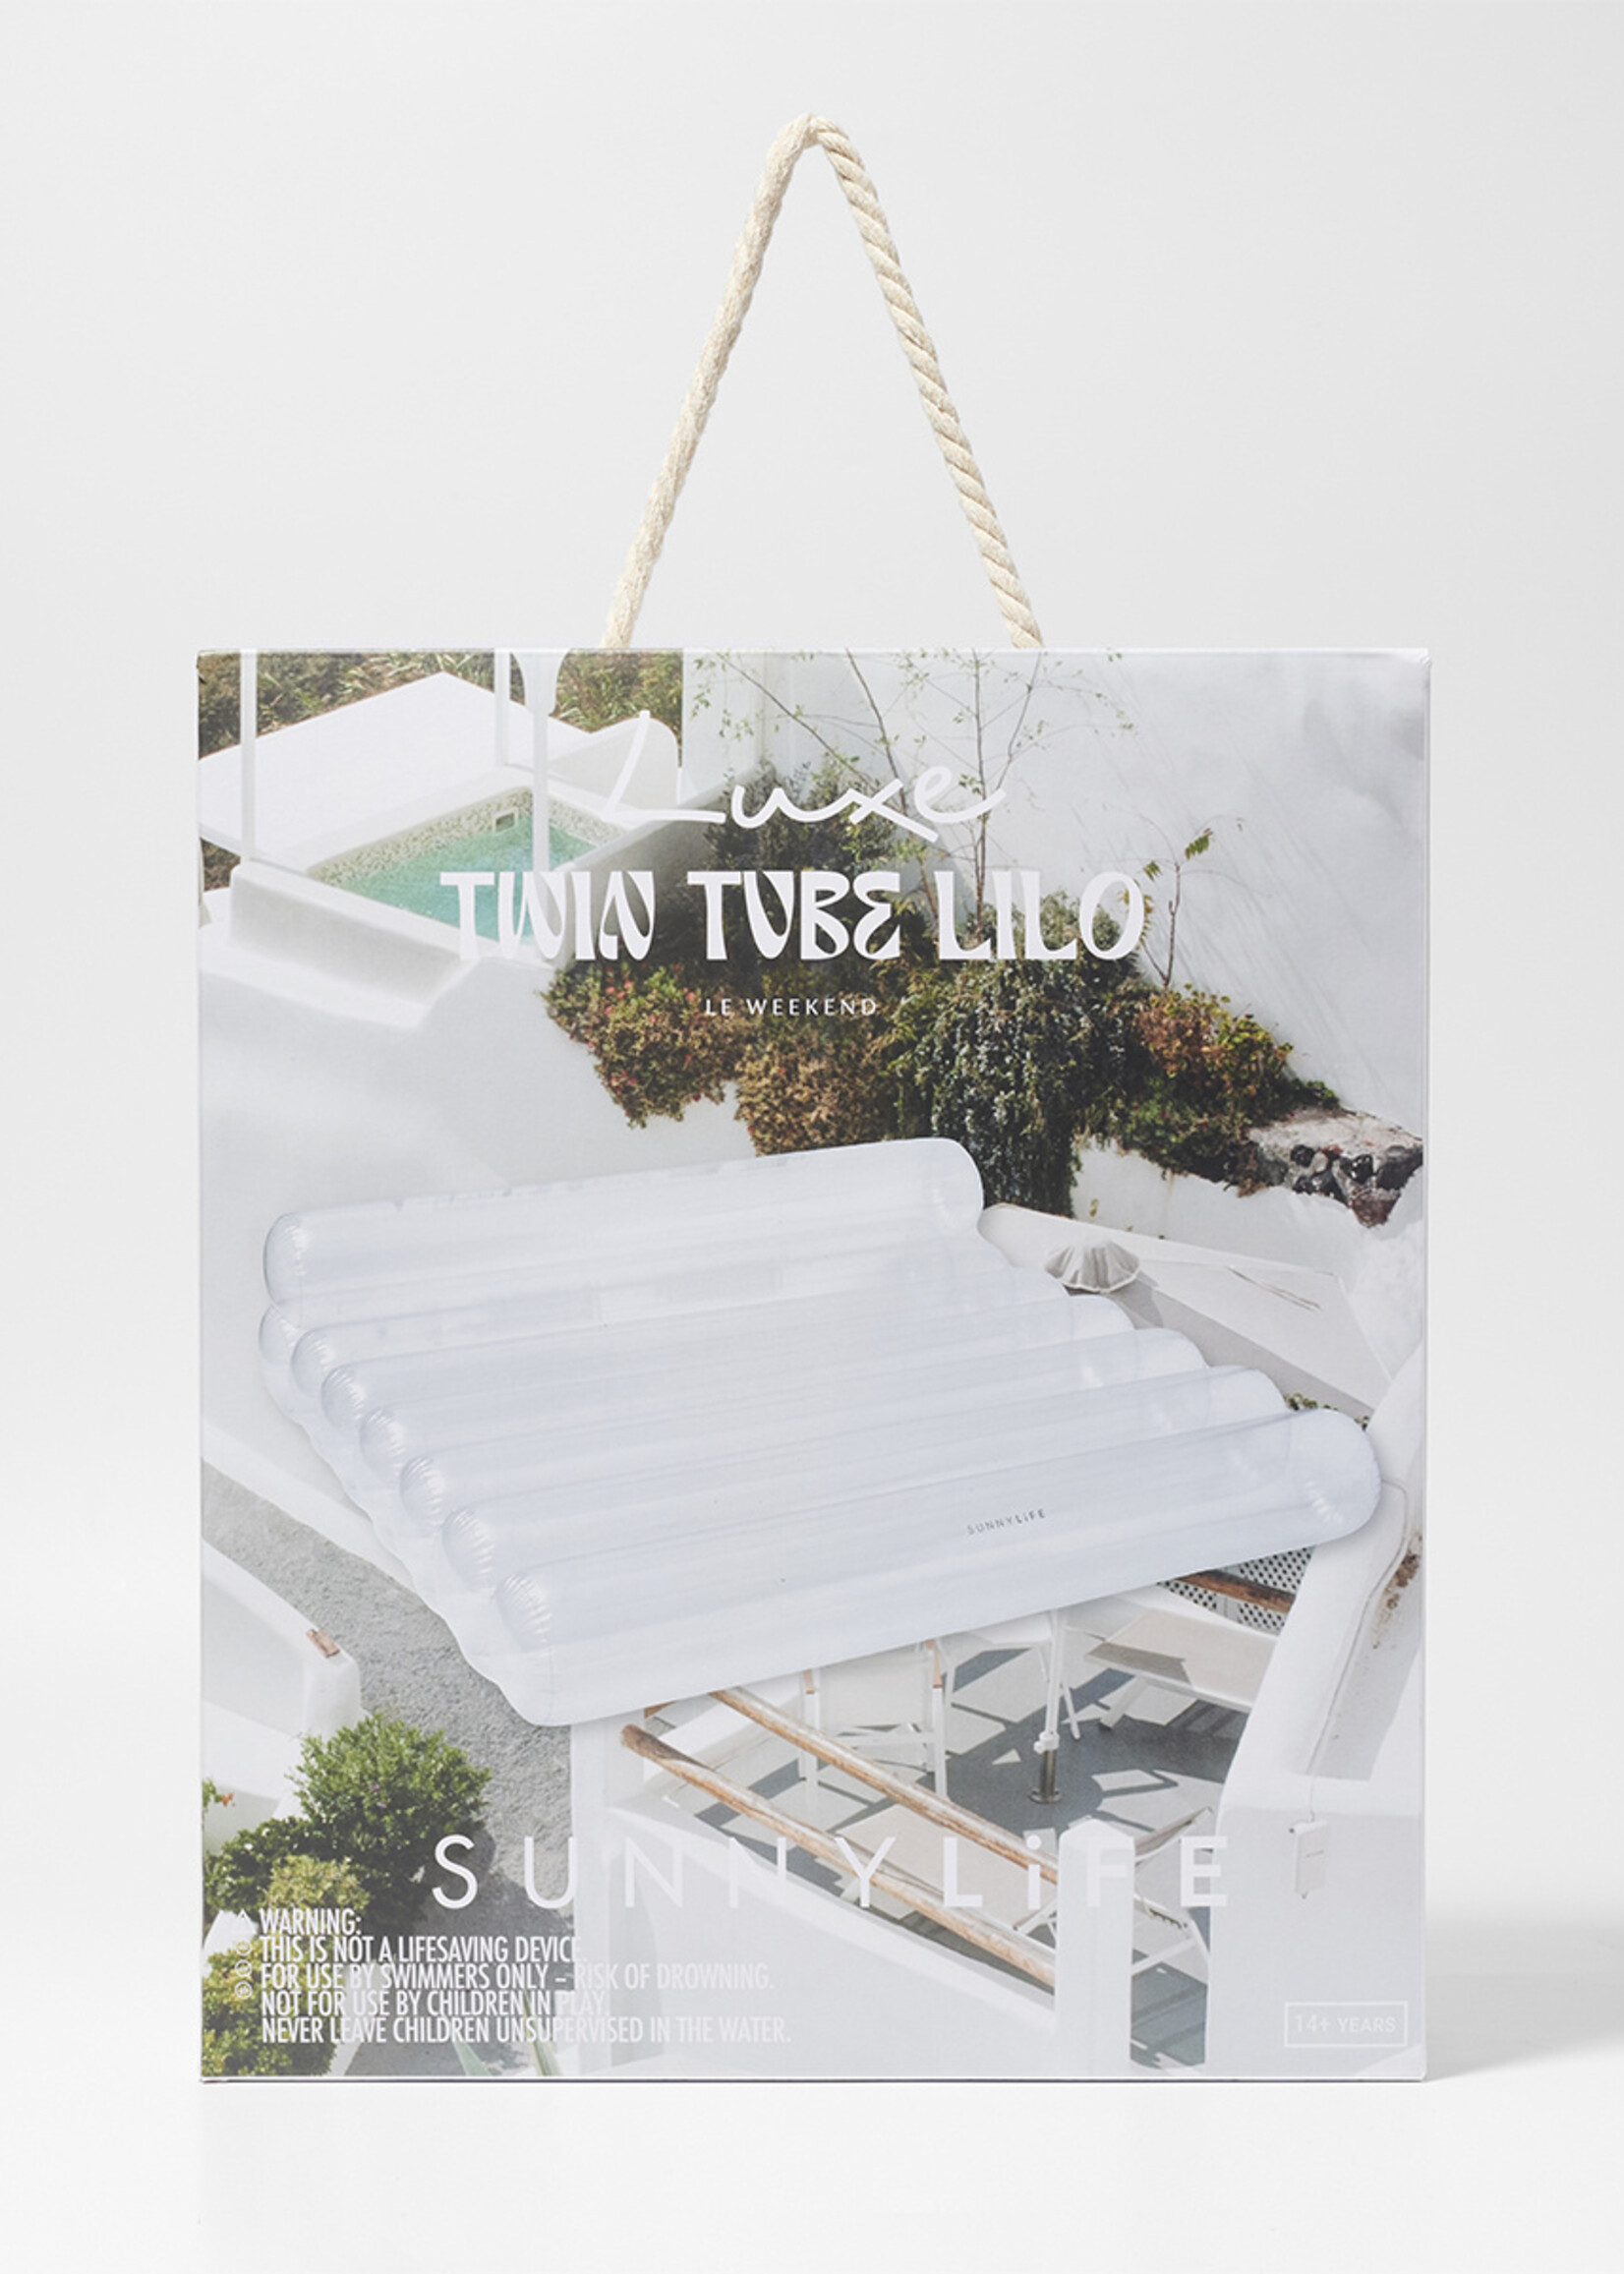 Sunnylife SunnyLife - Tube Lilo - Le Weekend - matelas gonflable - 2 pers - transparent